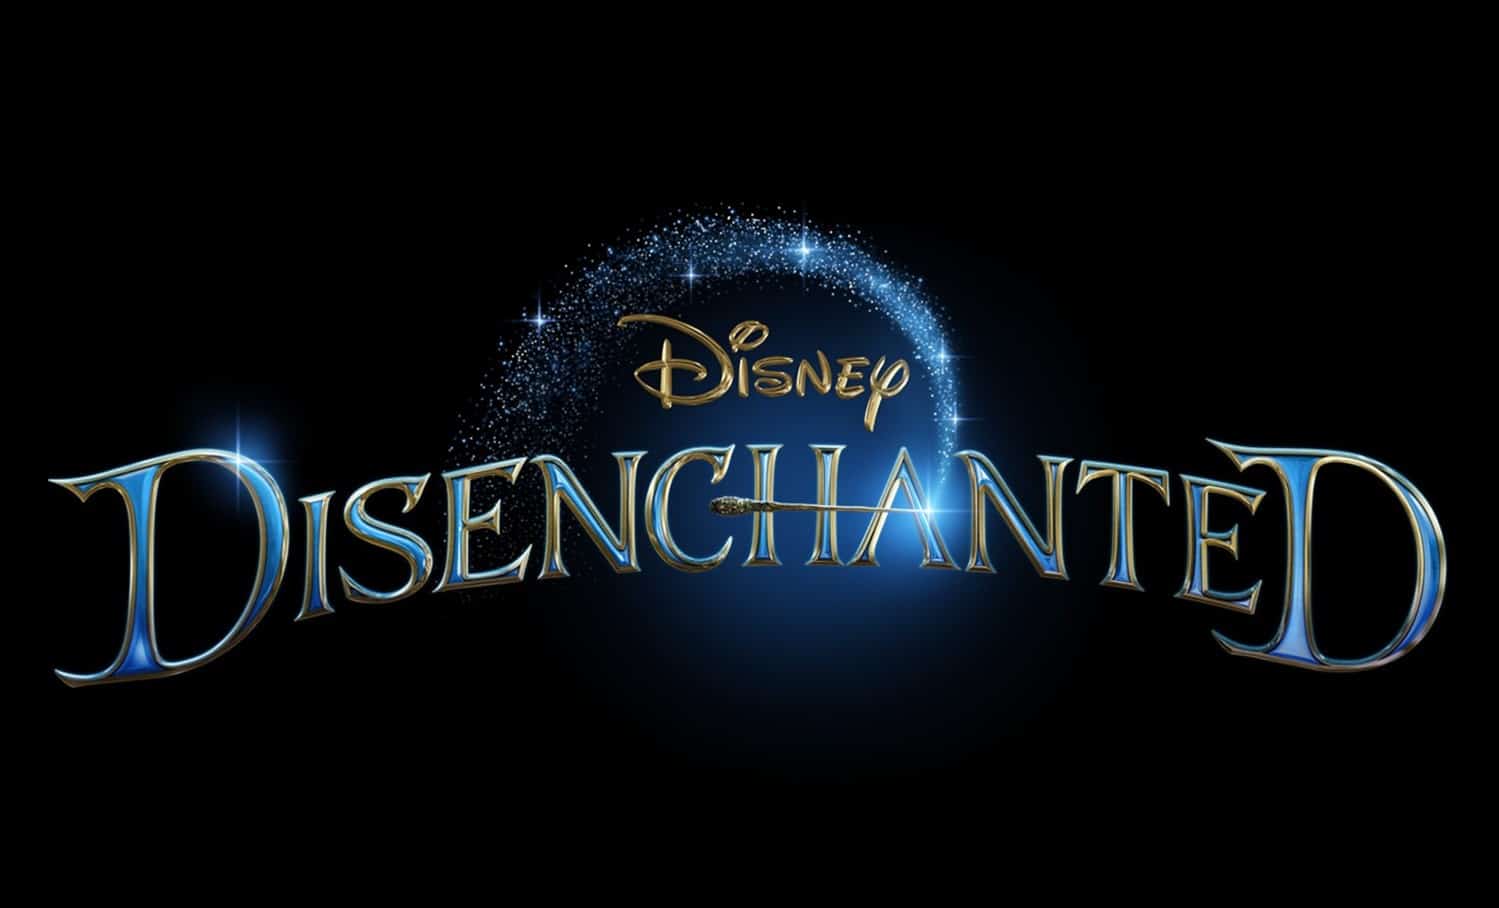 First Look At Disney+ Original Film “Disenchanted” – What's On Disney Plus